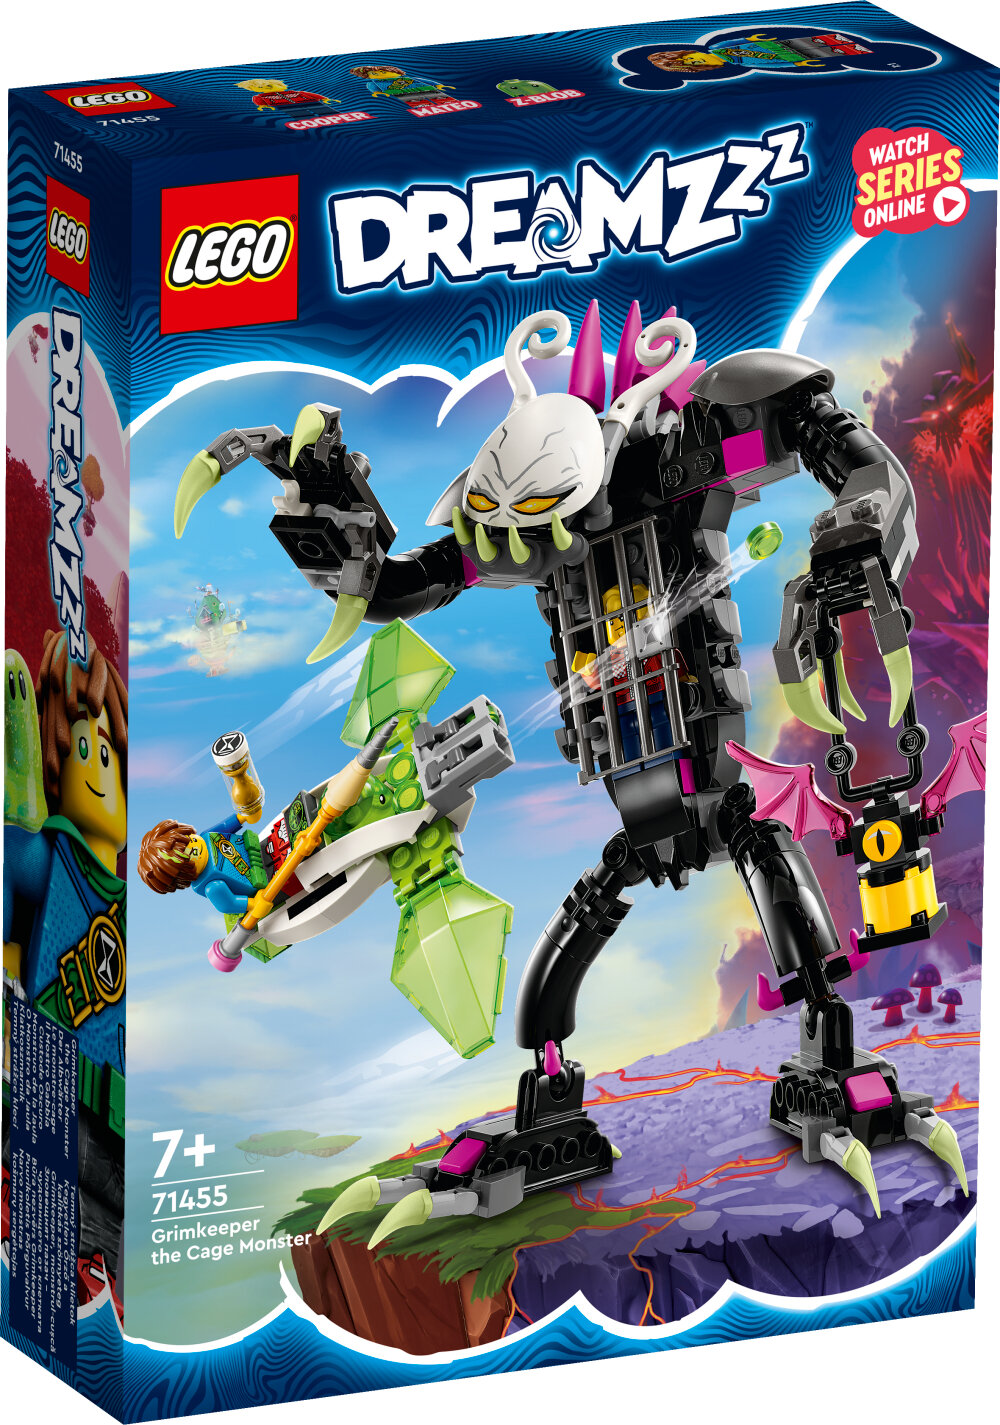 LEGO Dreamzzz - Grimkeeper-sellihirviö 7+